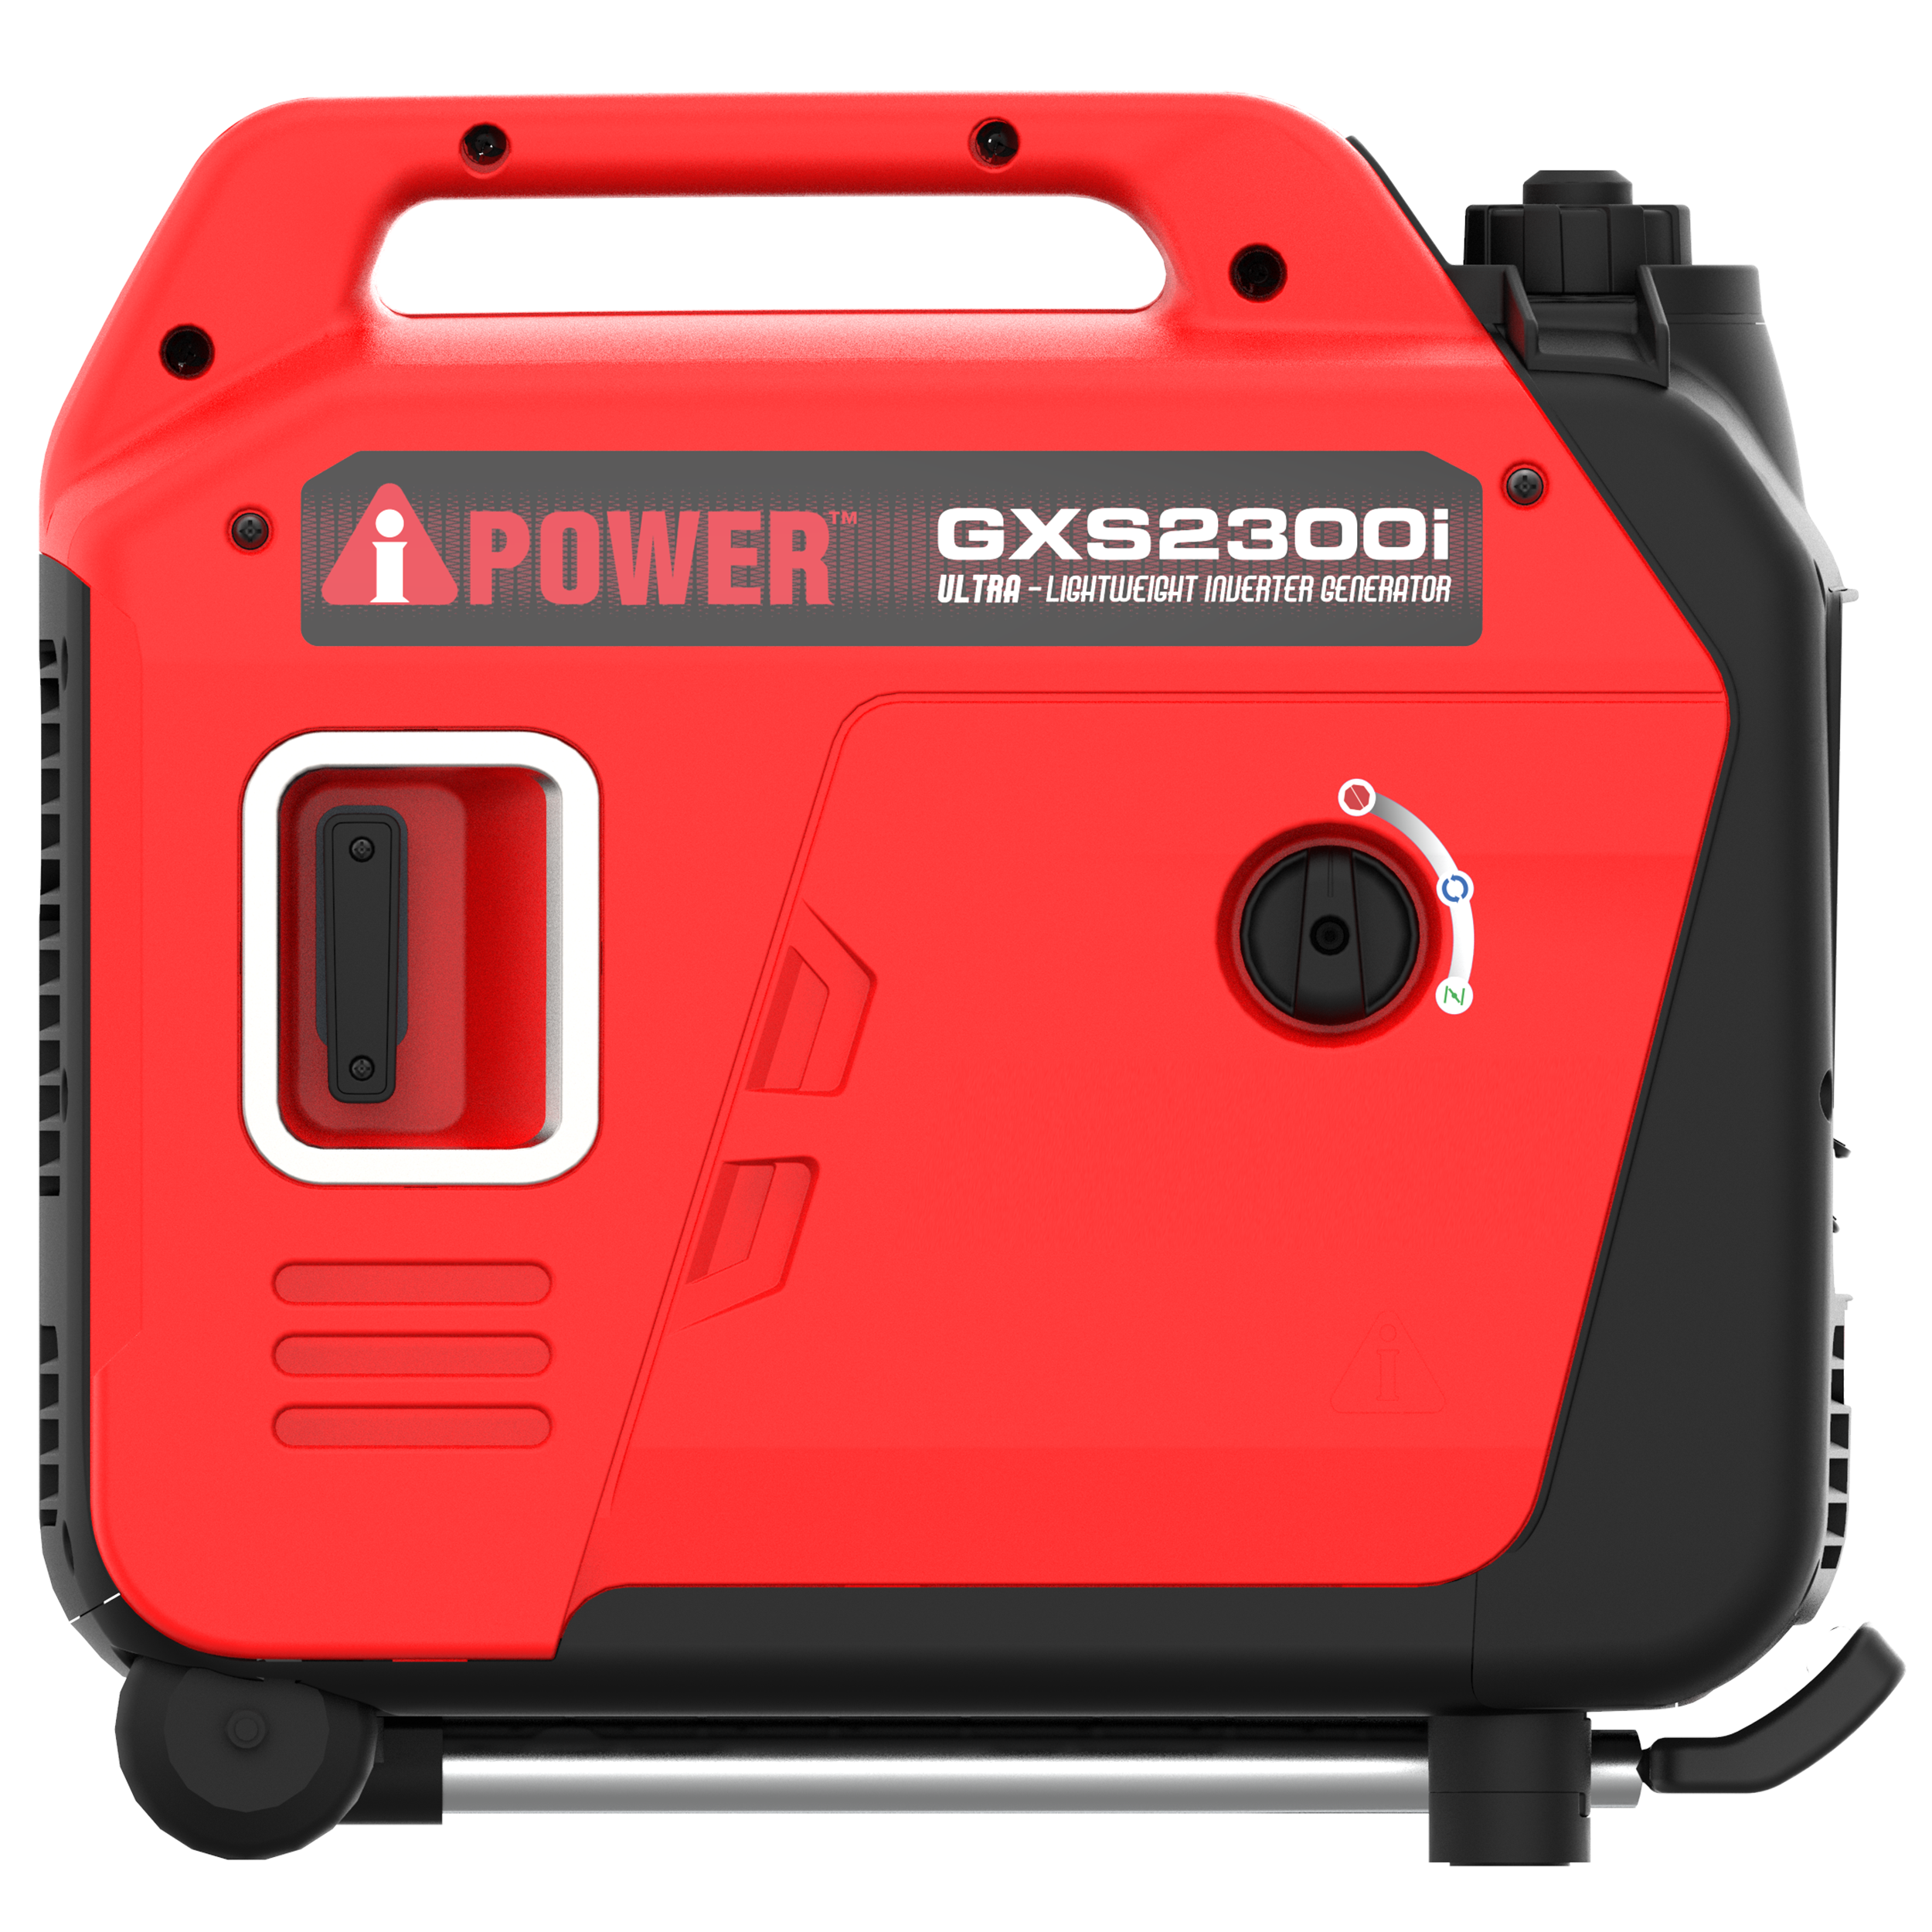 GXS2300i - Inverter Generator